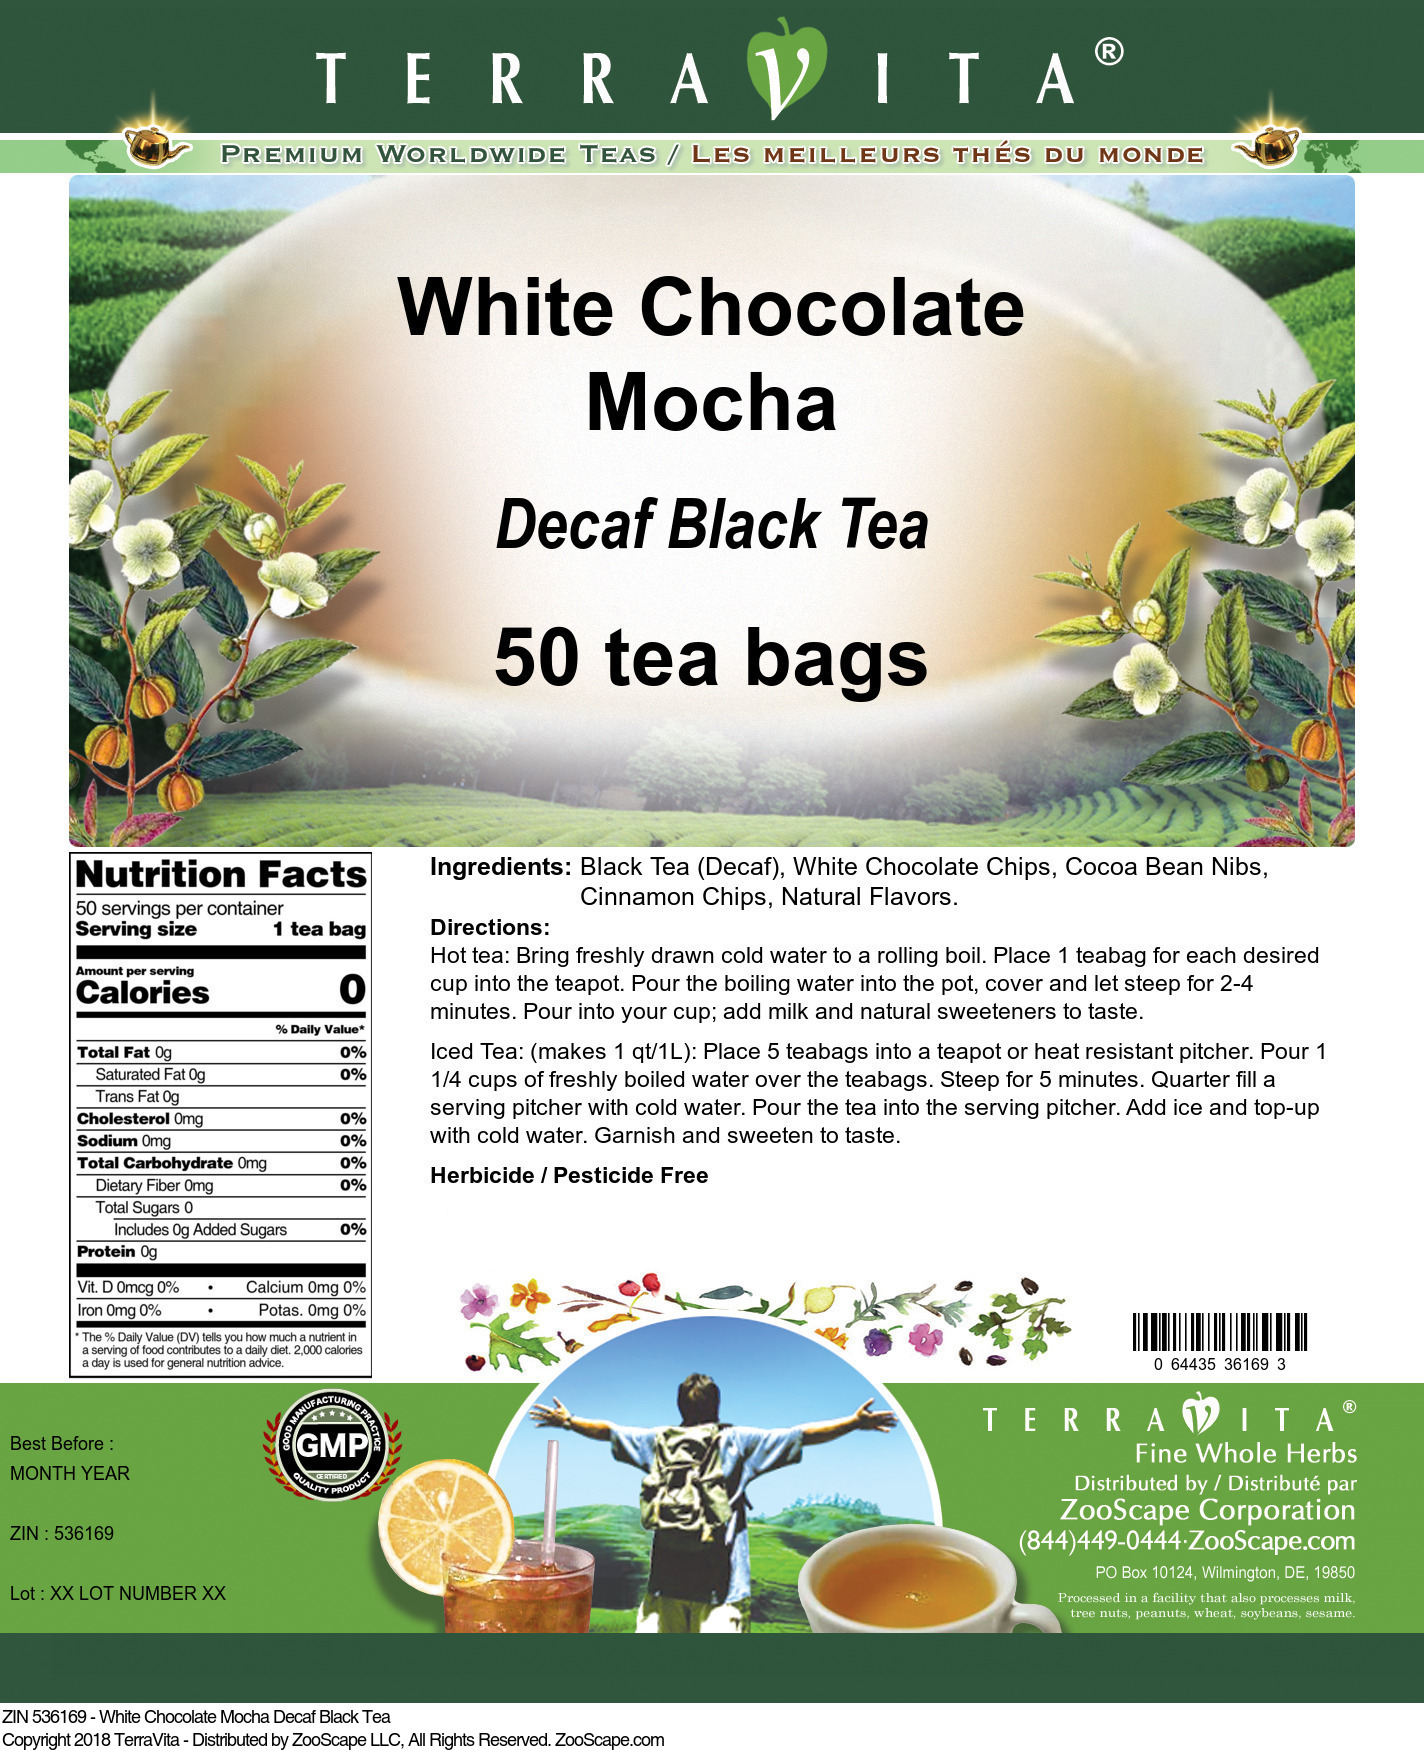 White Chocolate Mocha Decaf Black Tea - Label